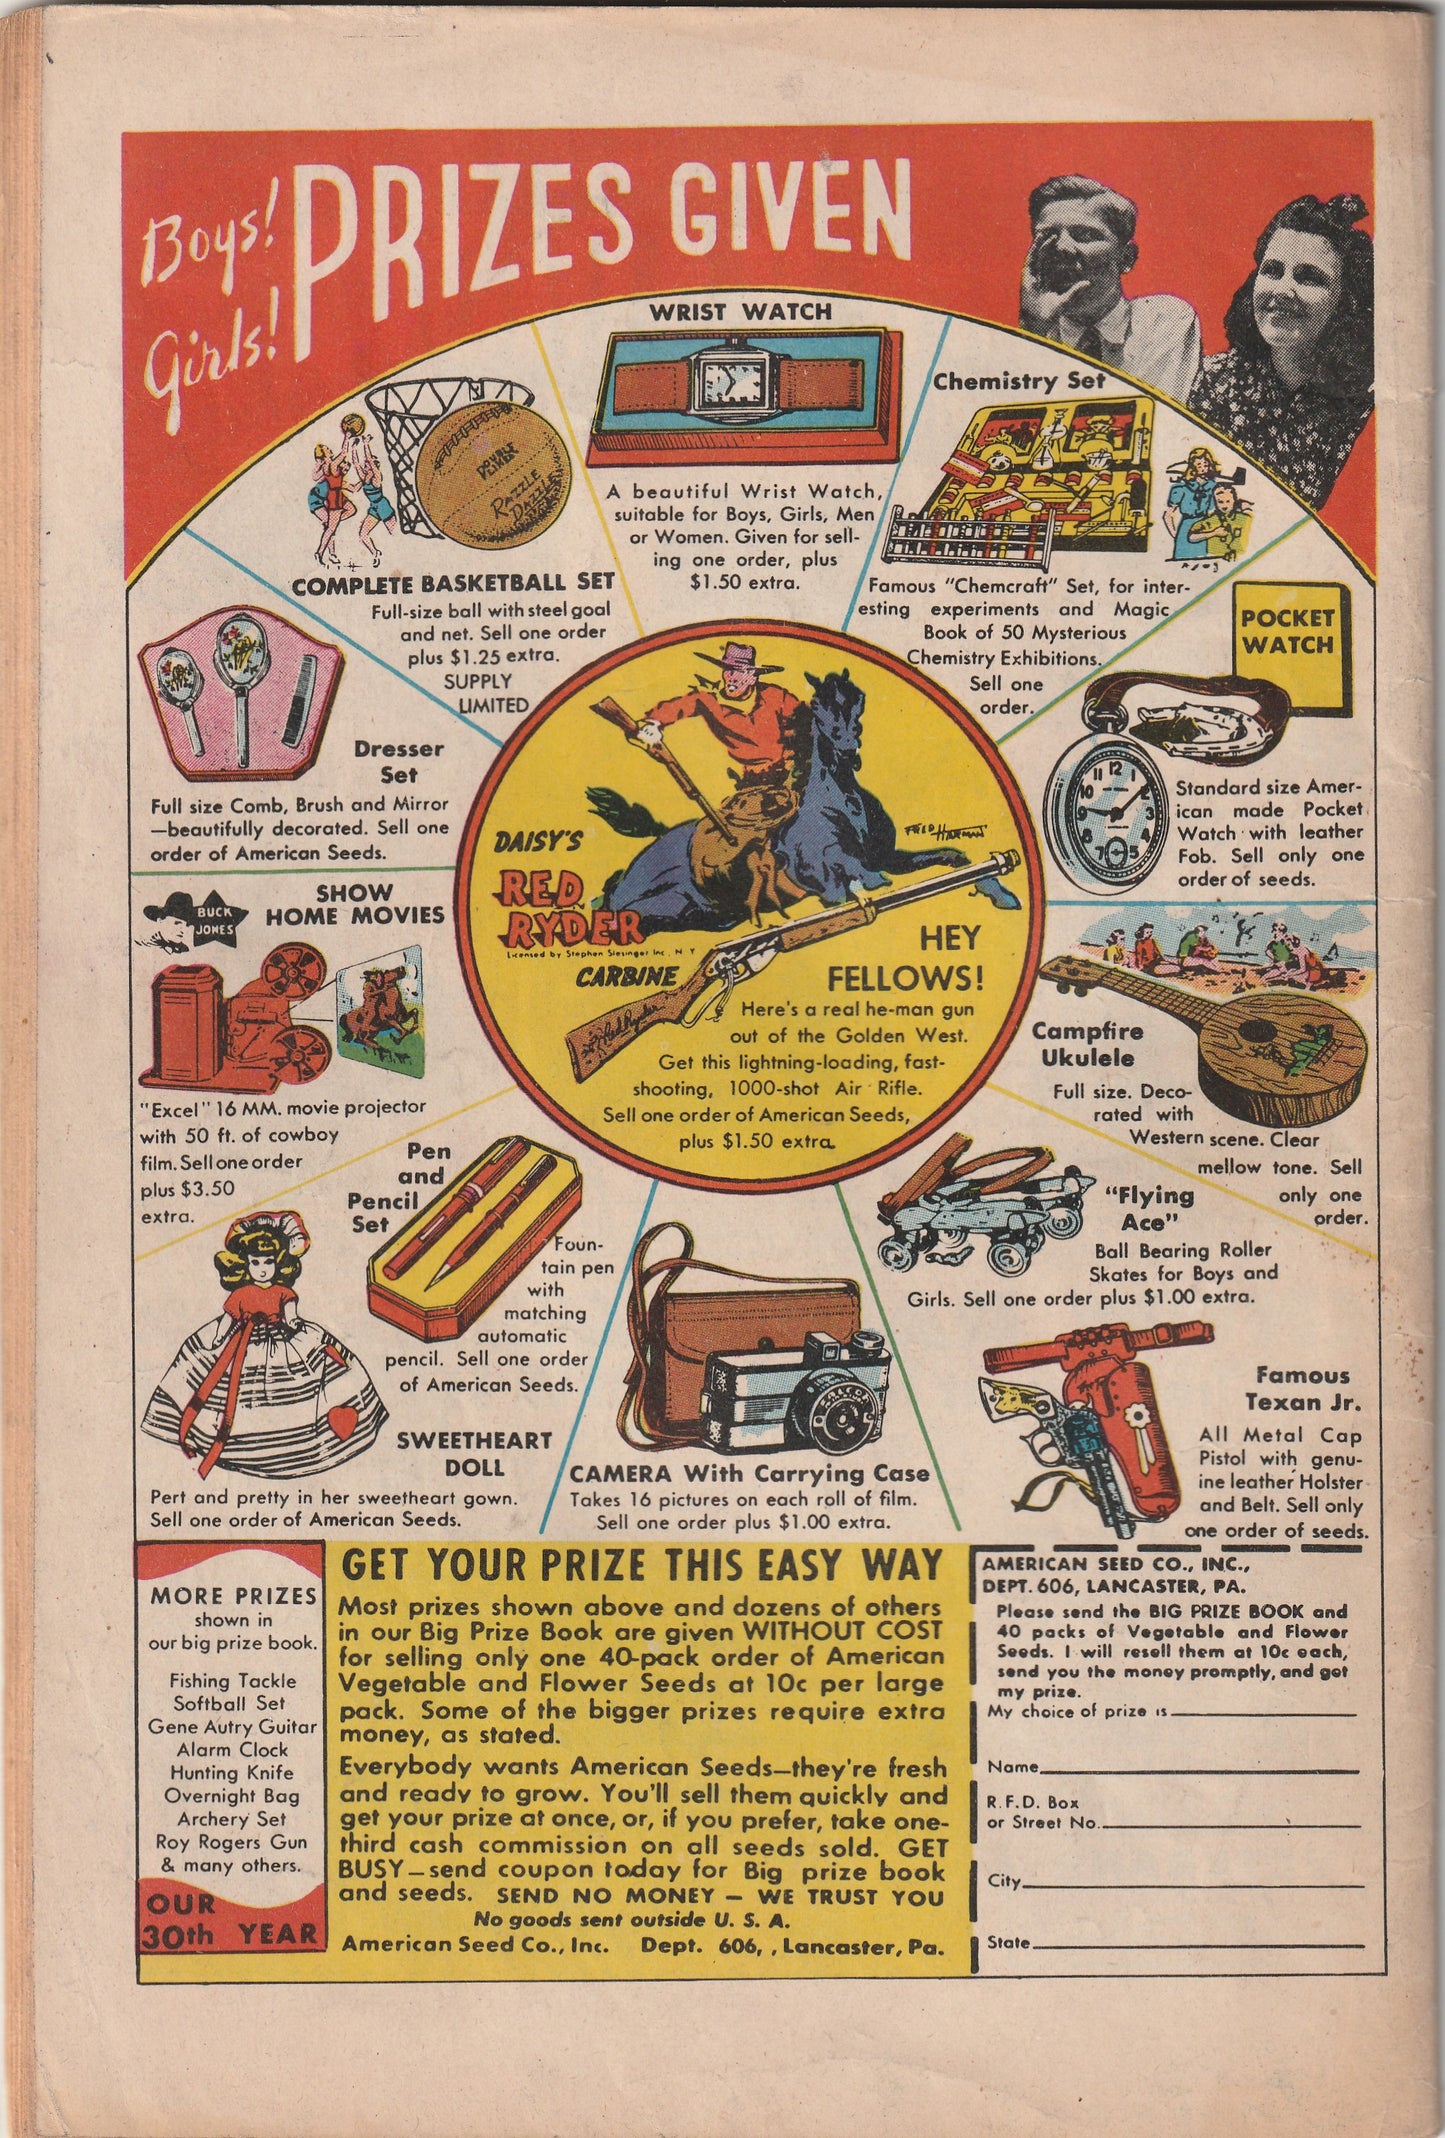 Wonder Comics #16 (1947) - Alex Schomburg (Xela) cover, Spectro appearance